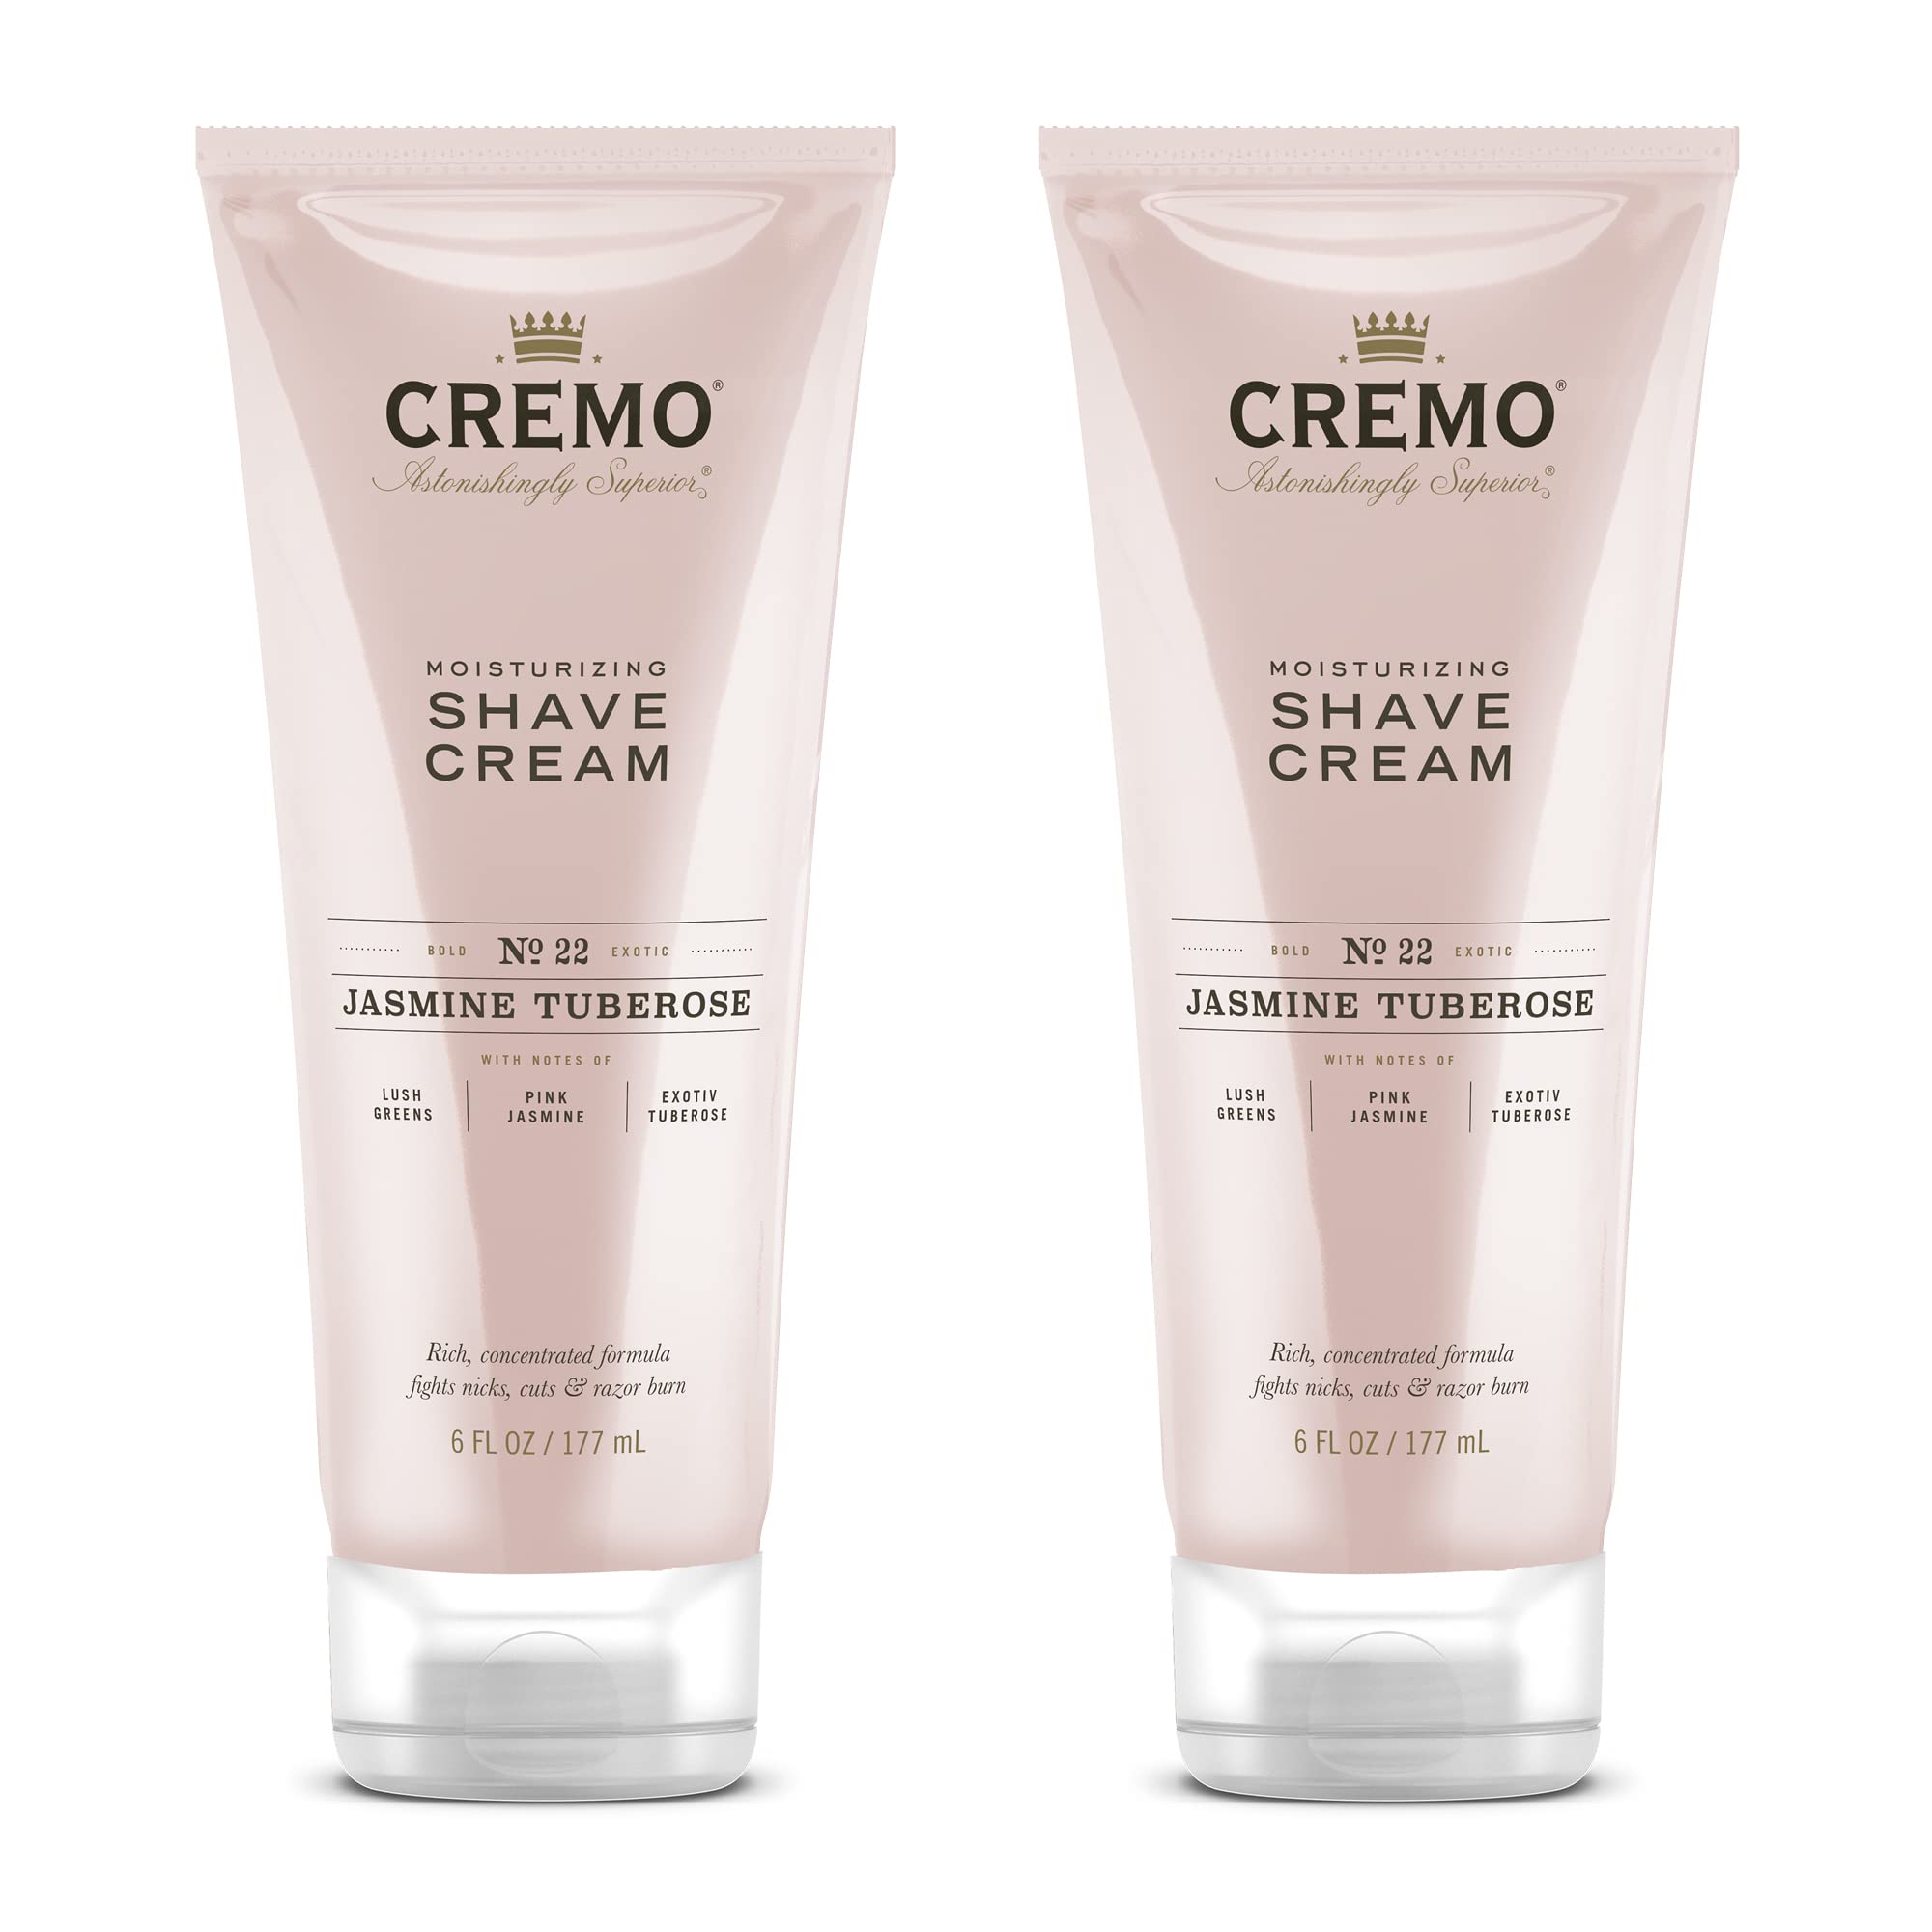 Cremo Jasmine Tuberose (Reserve Collection) Moisturizing Shave Cream, Astonishingly Superior Ultra-Slick Shaving Cream Fights Nicks, Cuts and Razor Burn, 6 Fl Oz (2 Pack)